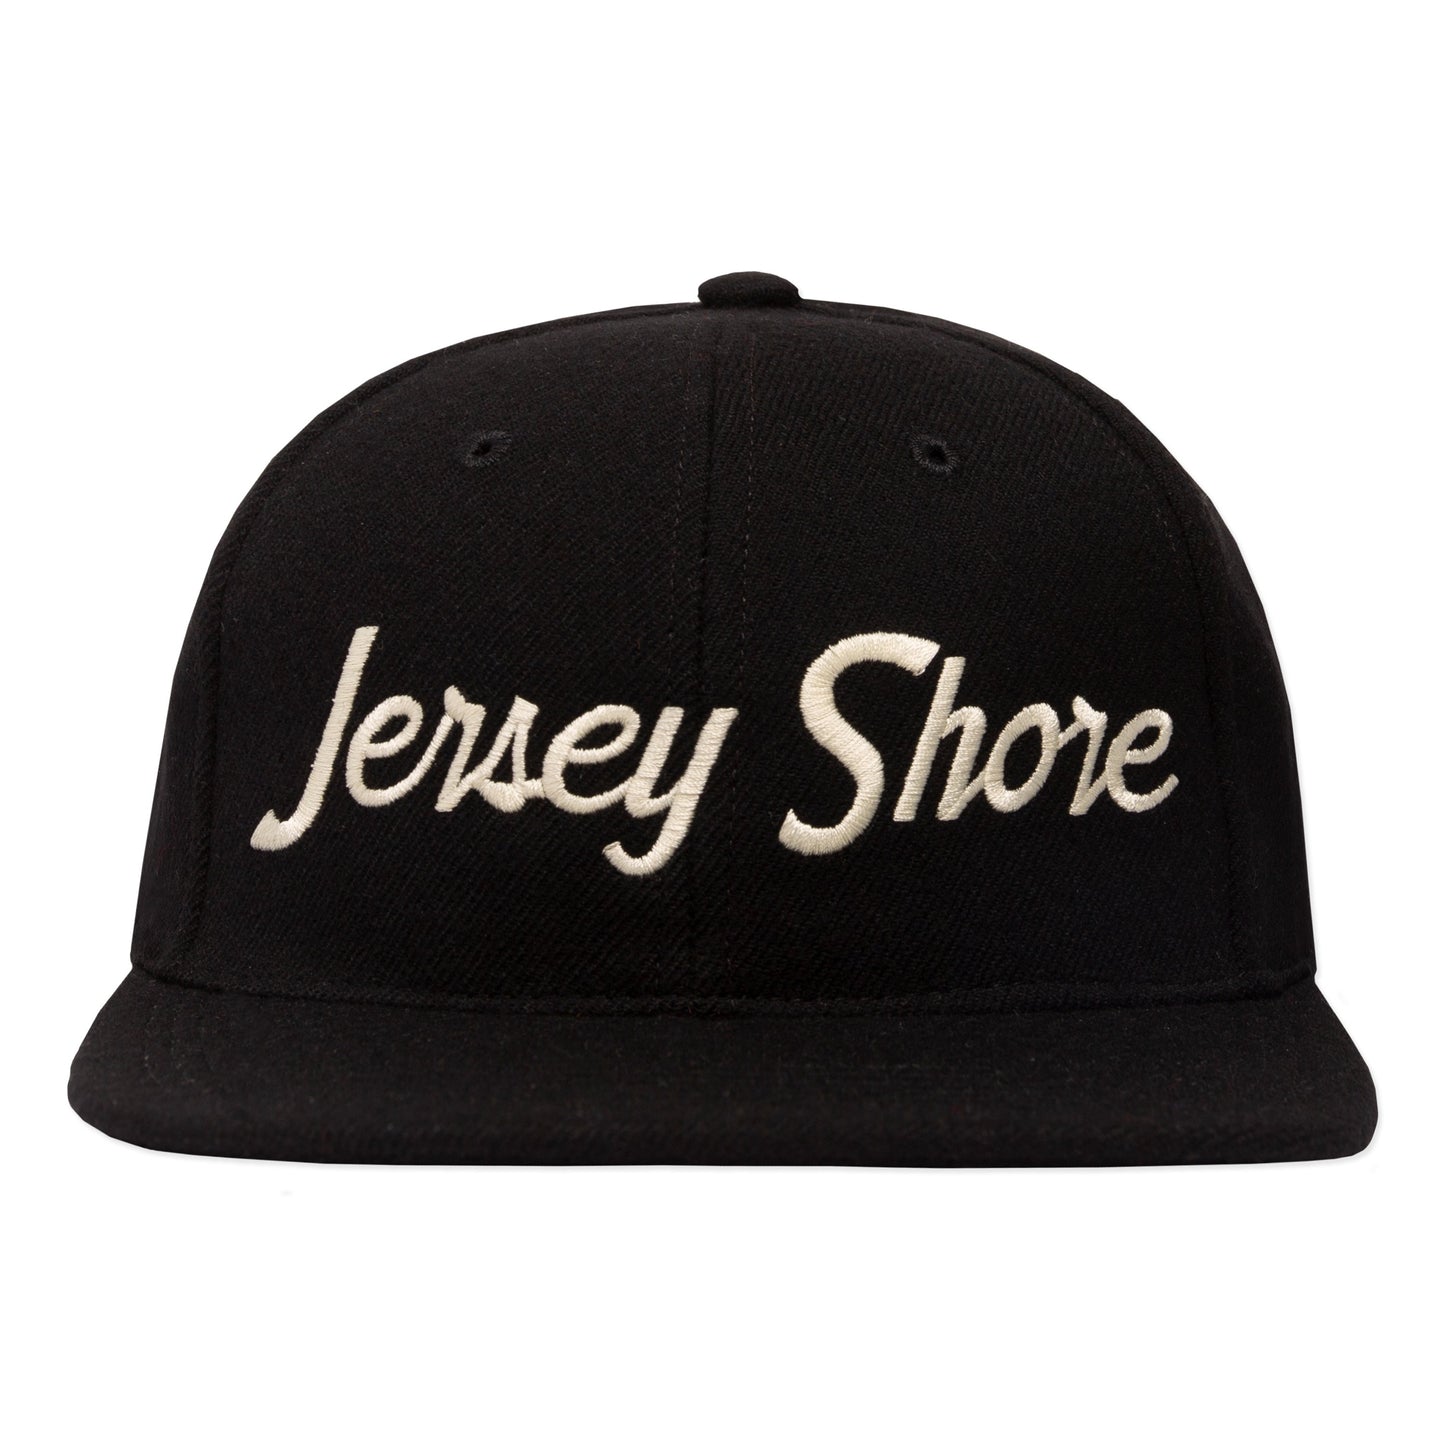 Jersey Shore Snapback Hat